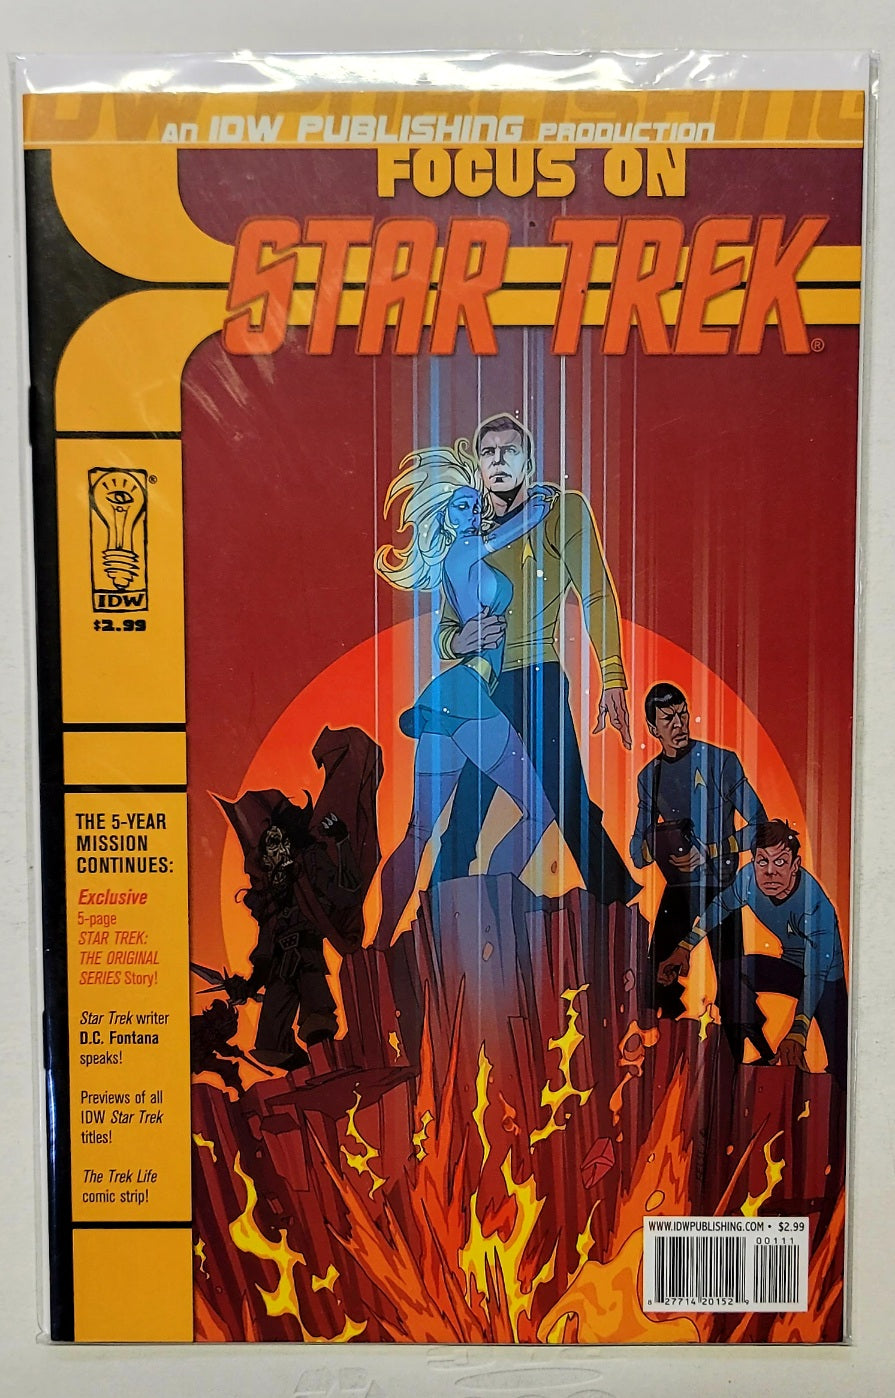 Focus on Star Trek: IDW Comic Book Five Year Original Series Story